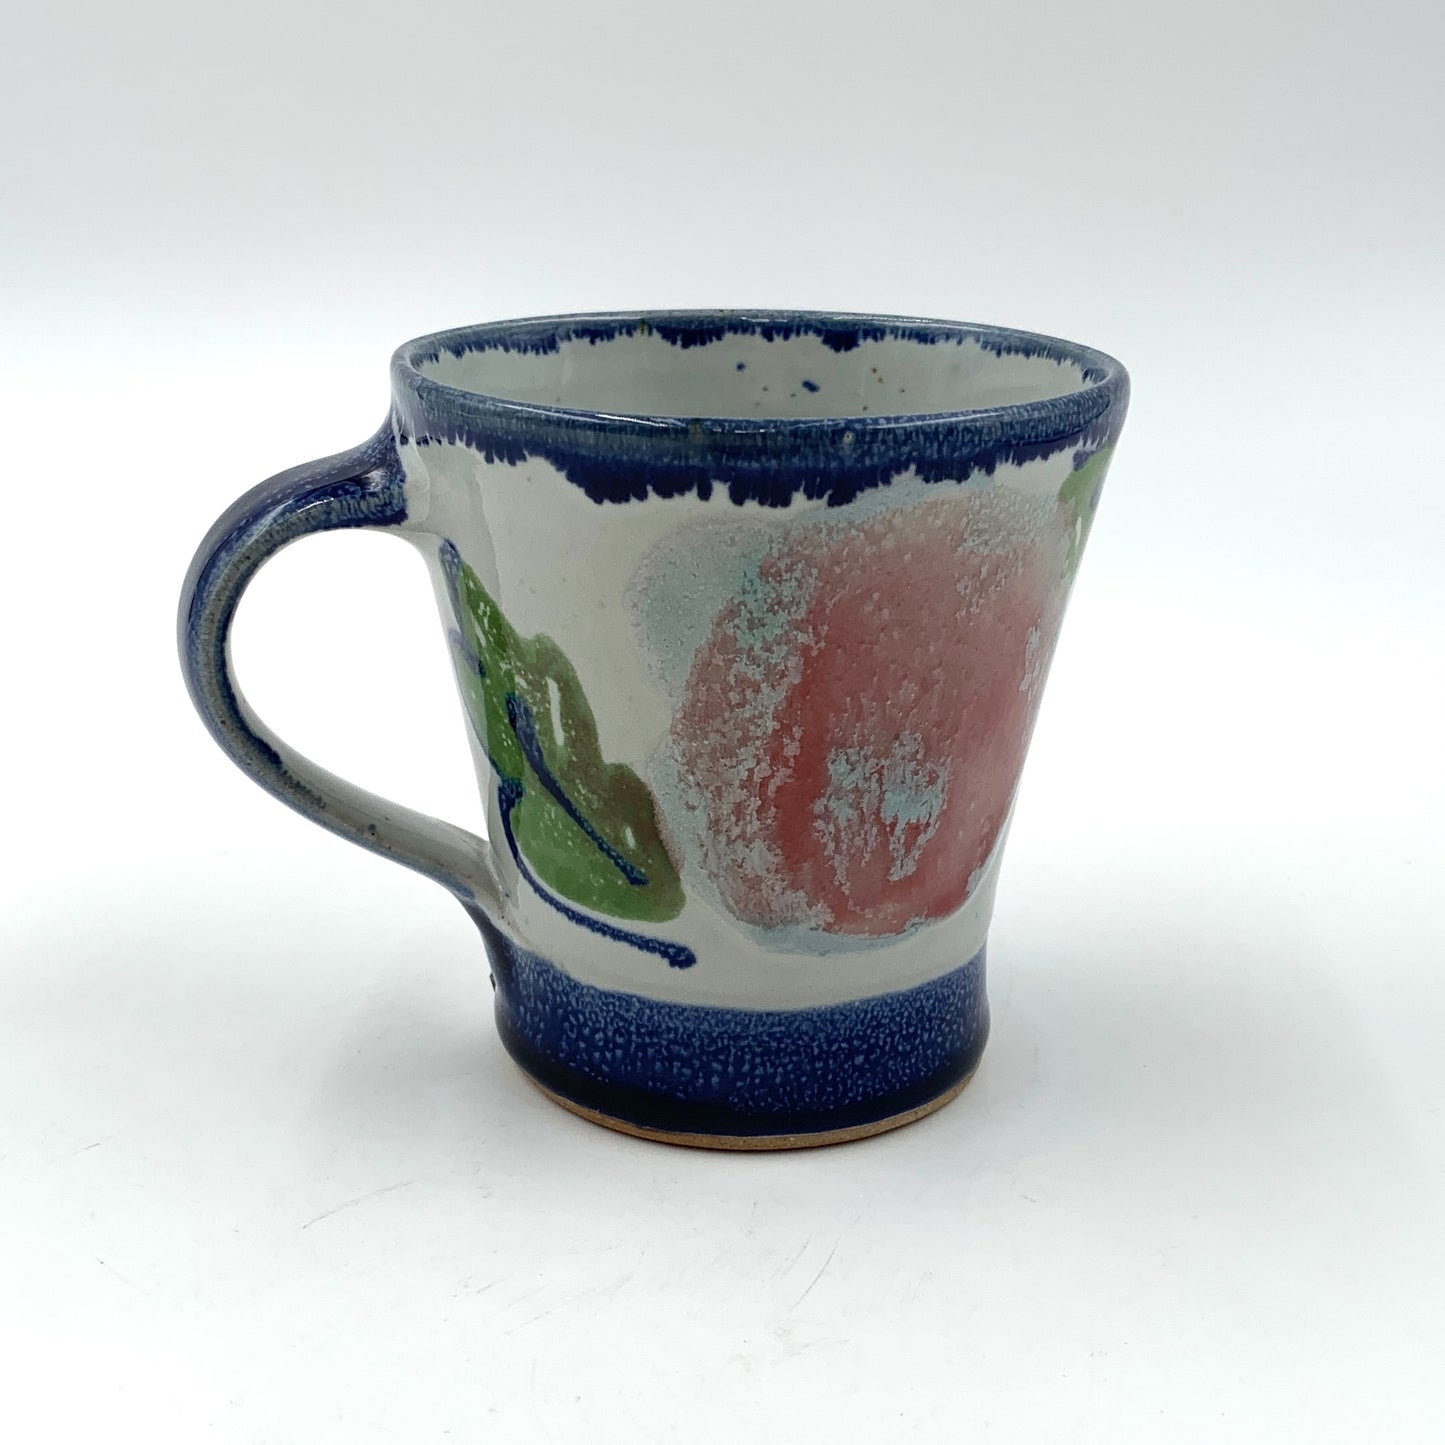 Mug with Fish or Rose Motif